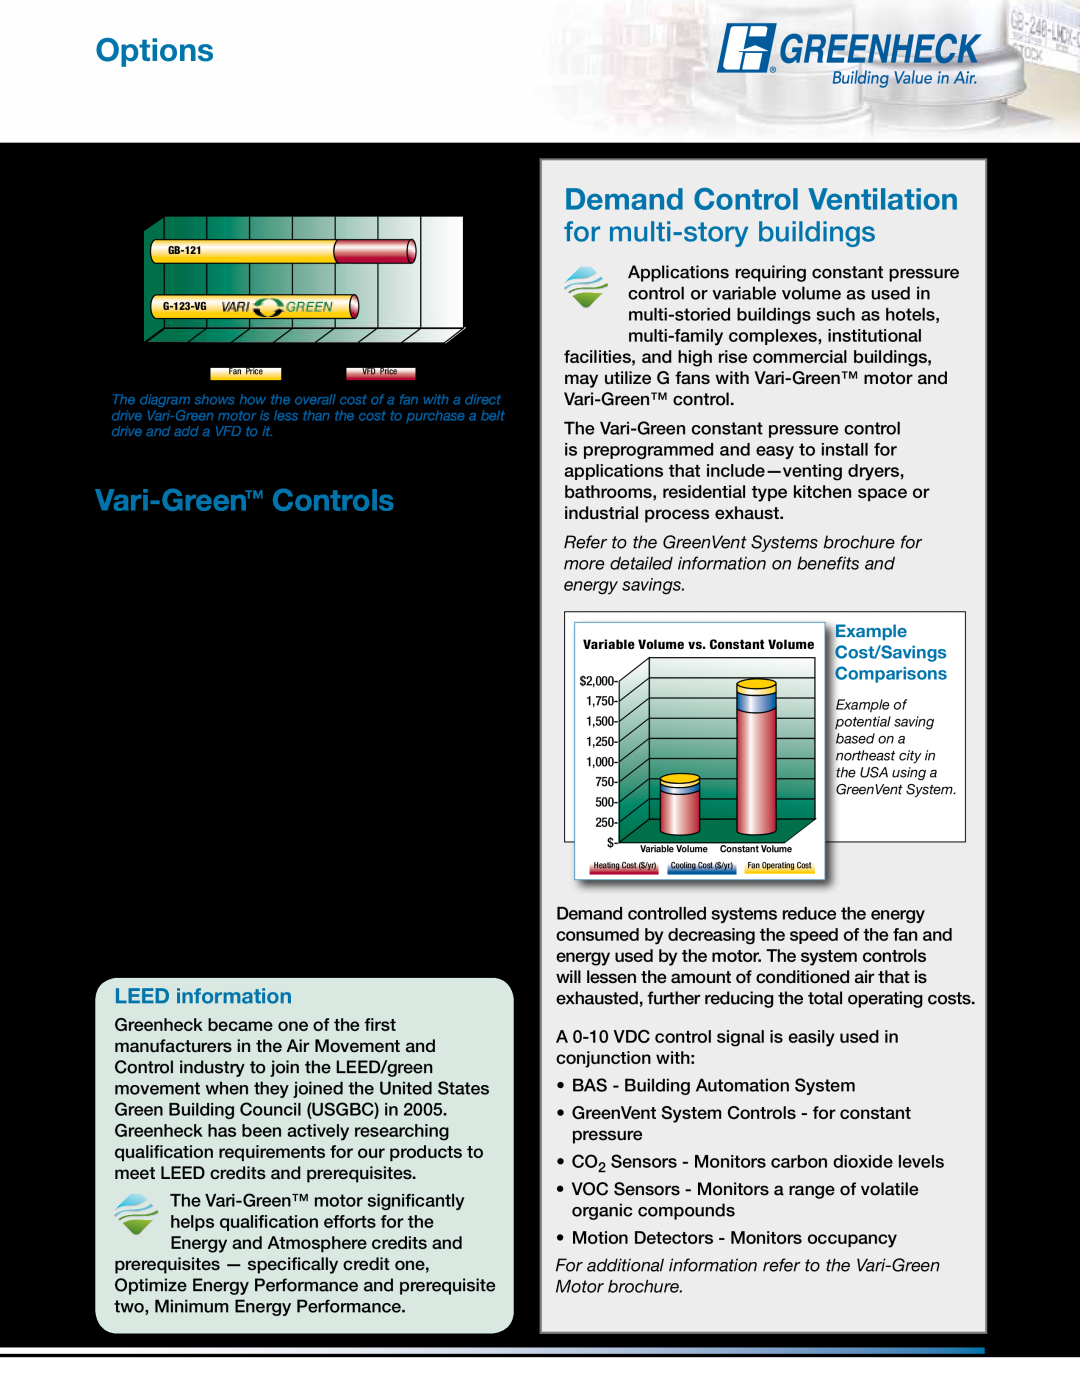 Greenheck Fan GB manual Vari-Green Controls, Demand Control Ventilation, for multi-story buildings, Options 